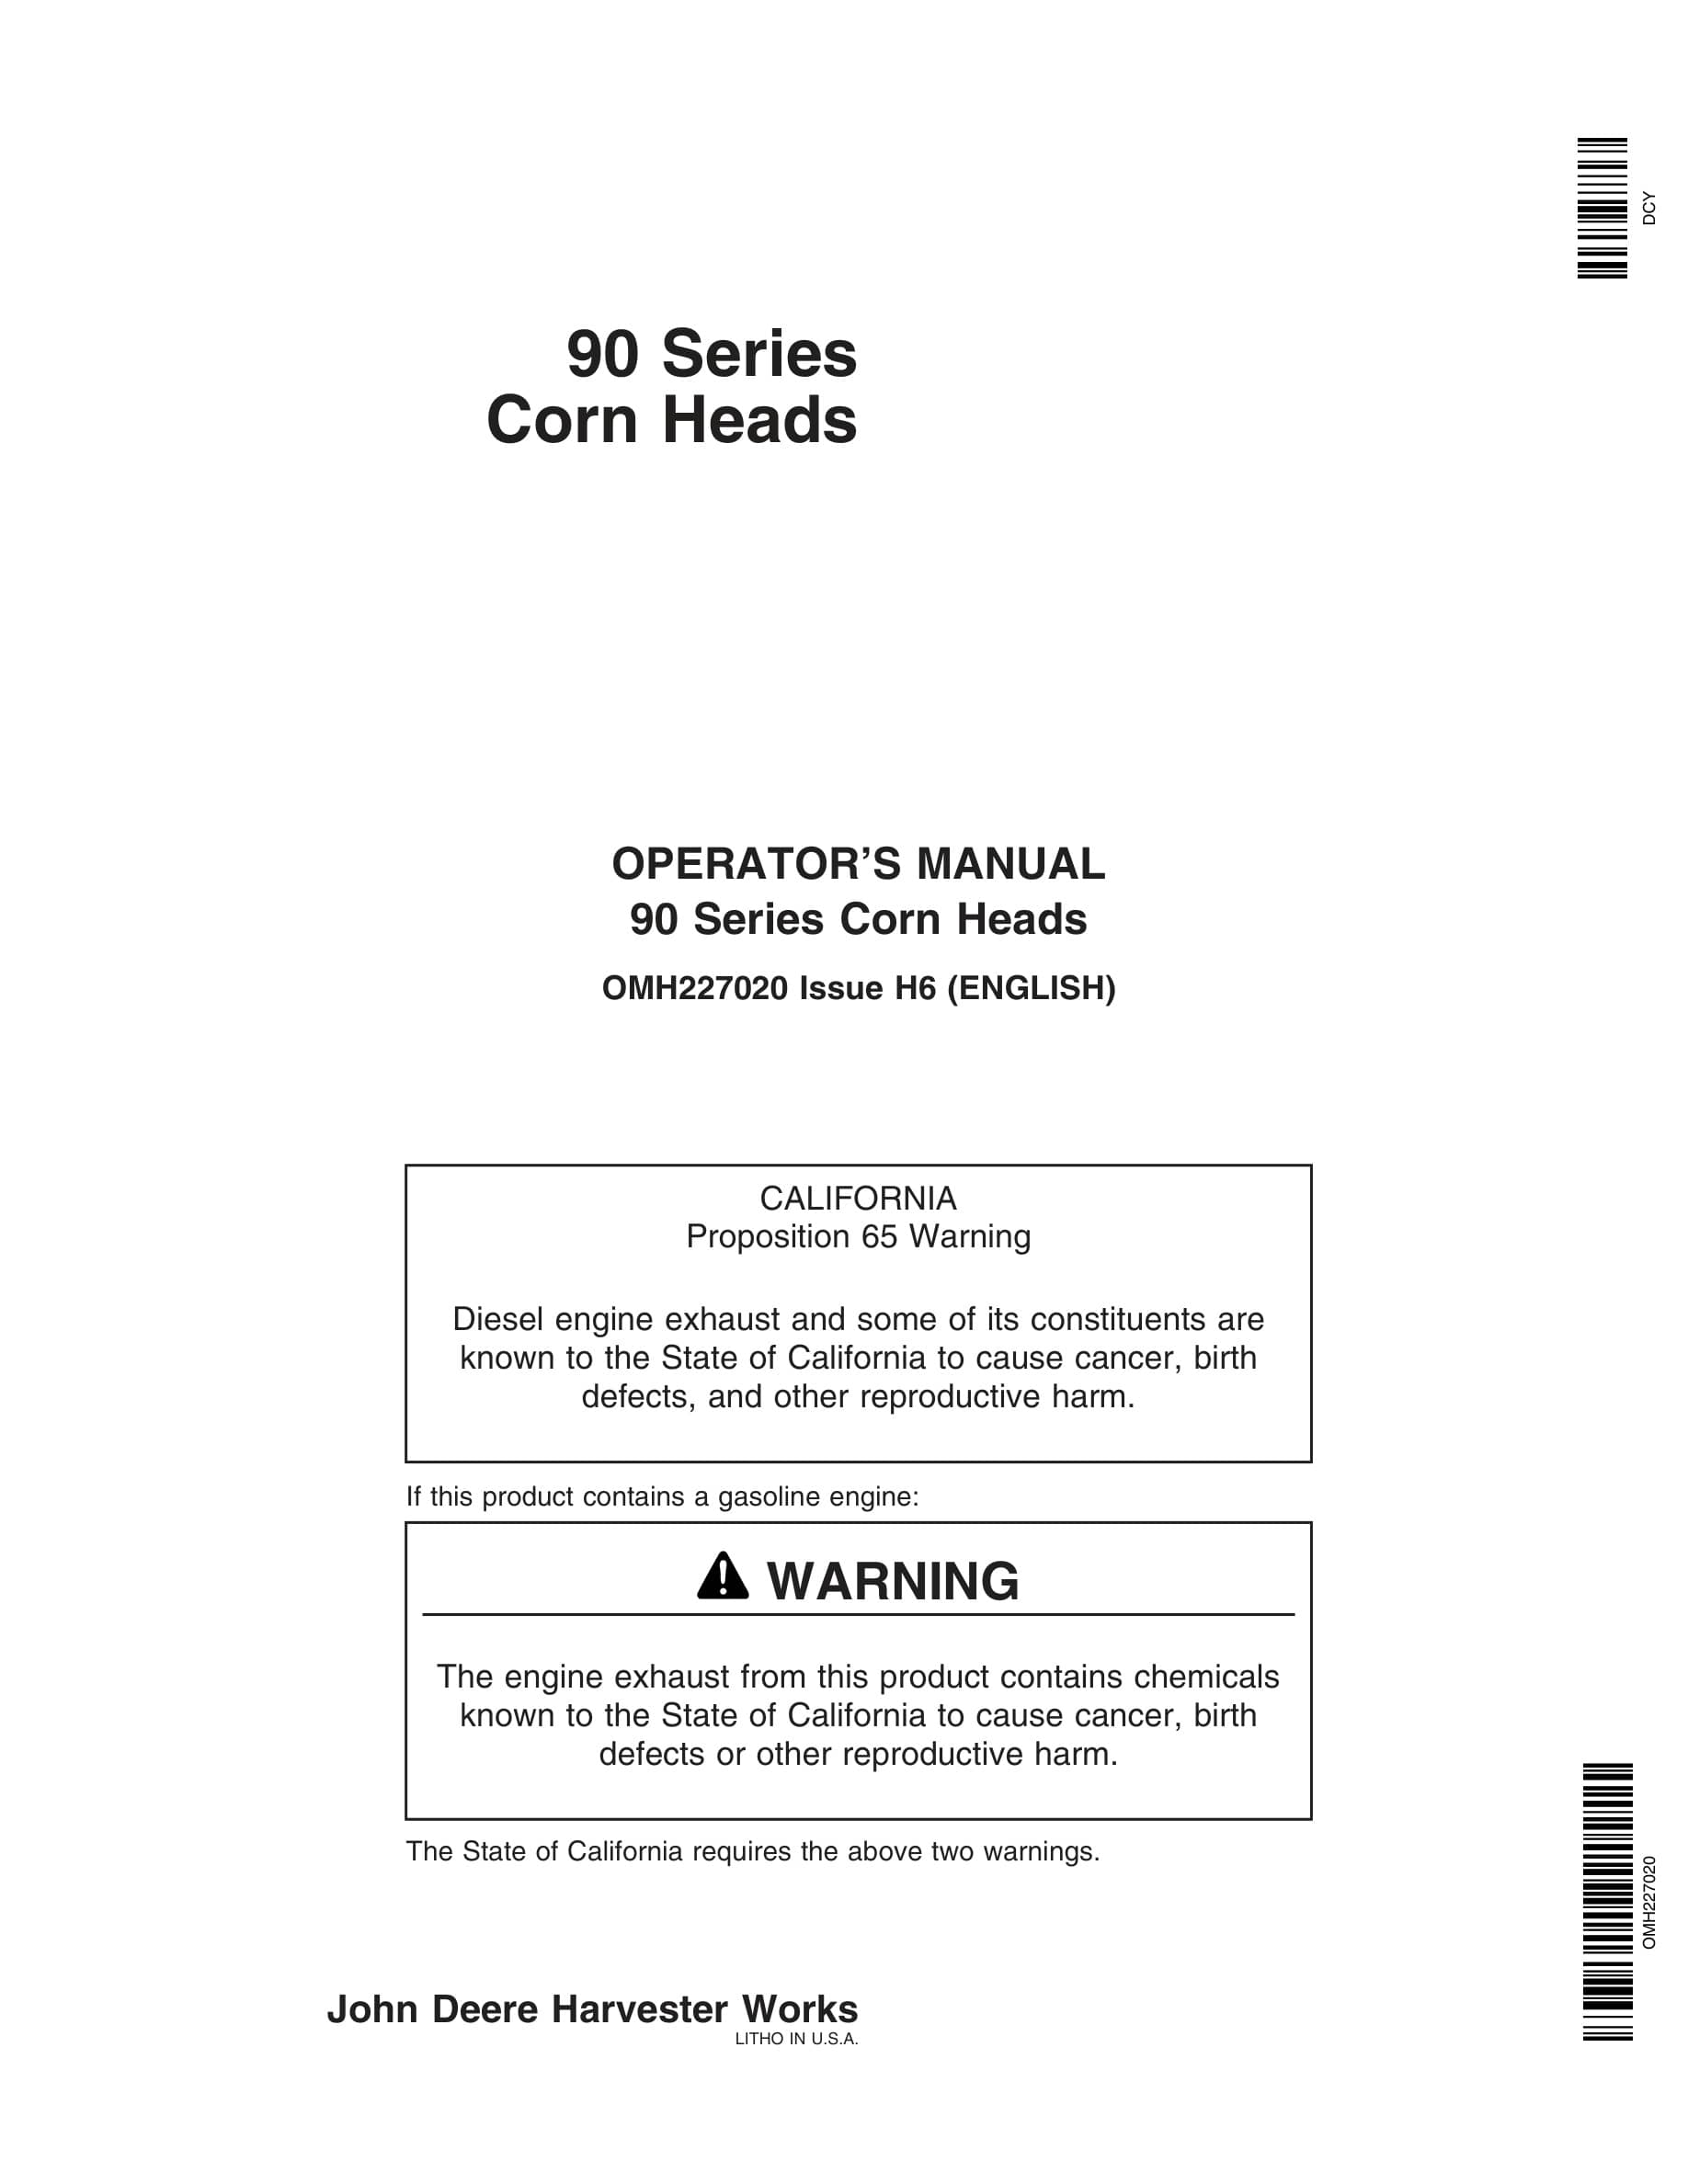 John Deere 90 Series Corn Heads Operator Manual OMH227020-1